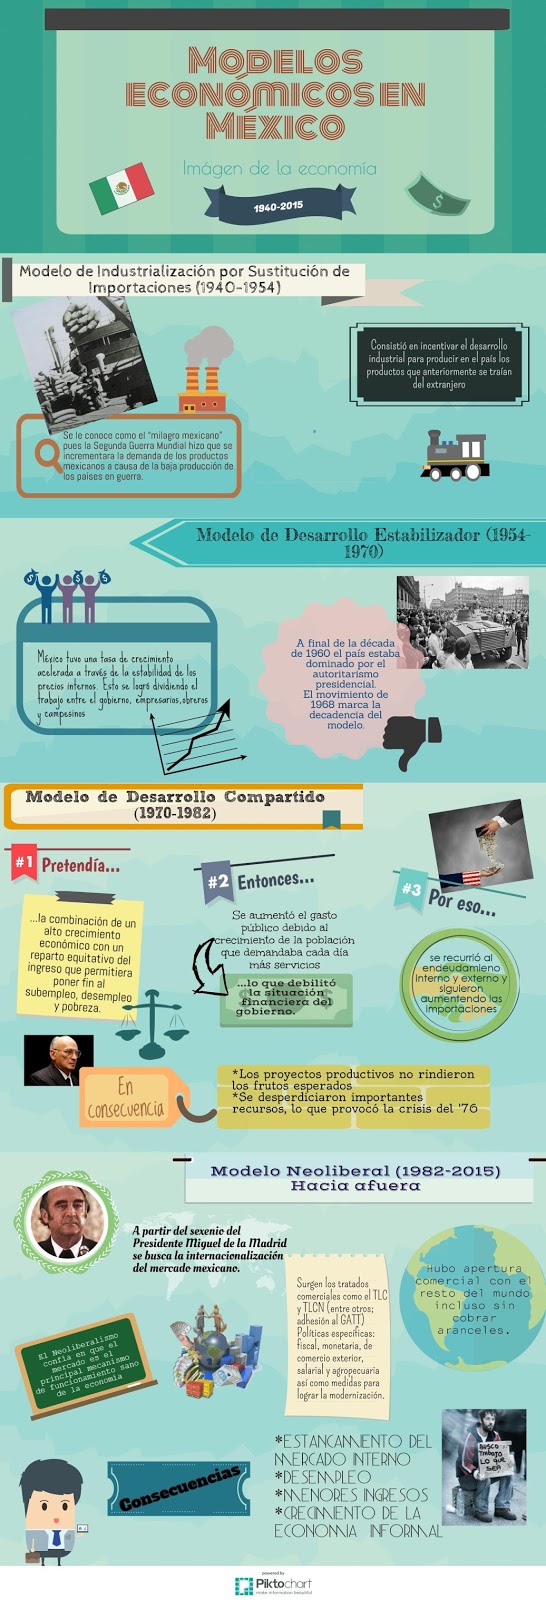 Experiencias y educación en linea.: Infografía modelos económicos de México  | Piktochart Infographic Editor